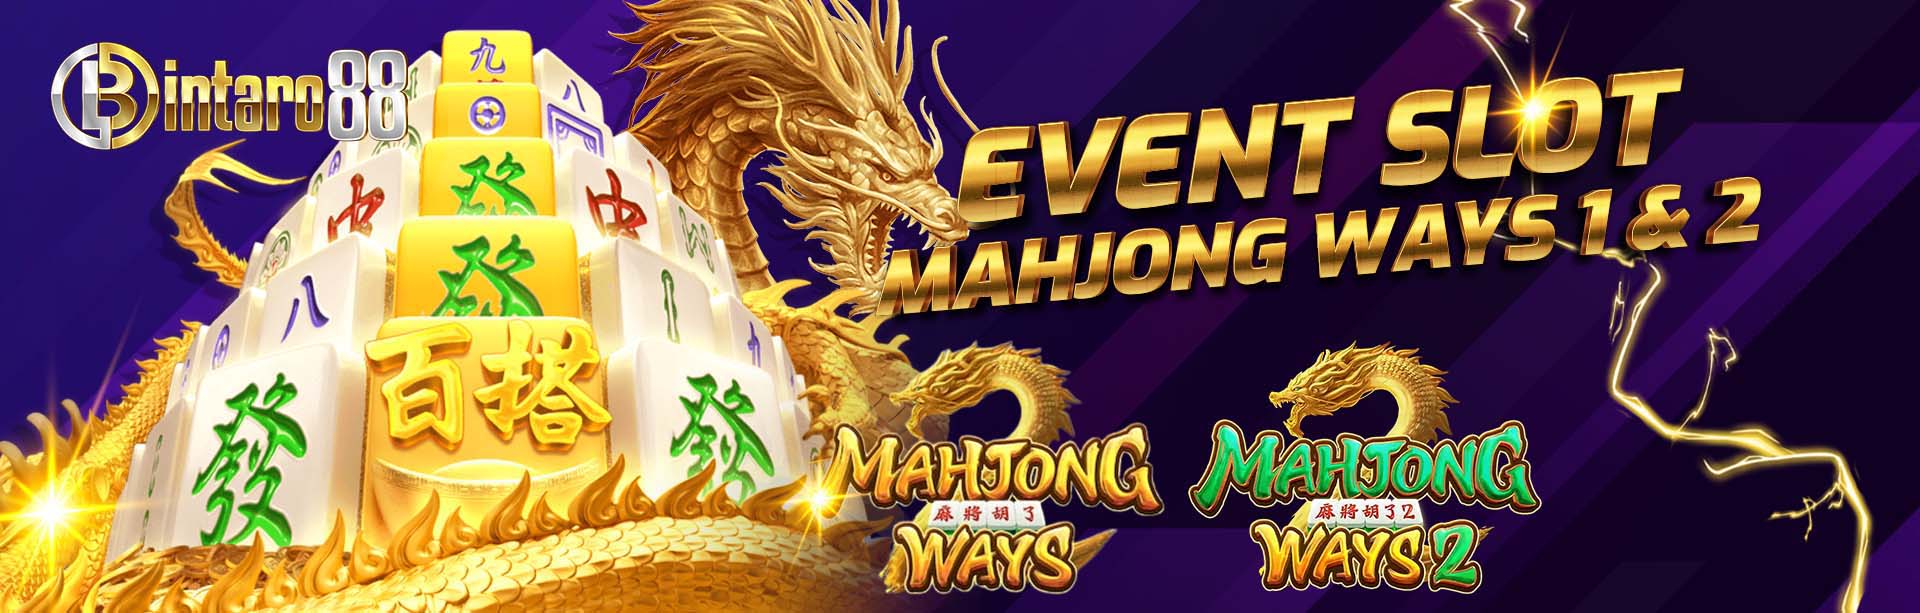 Event Slot Mahjong Ways 1&2